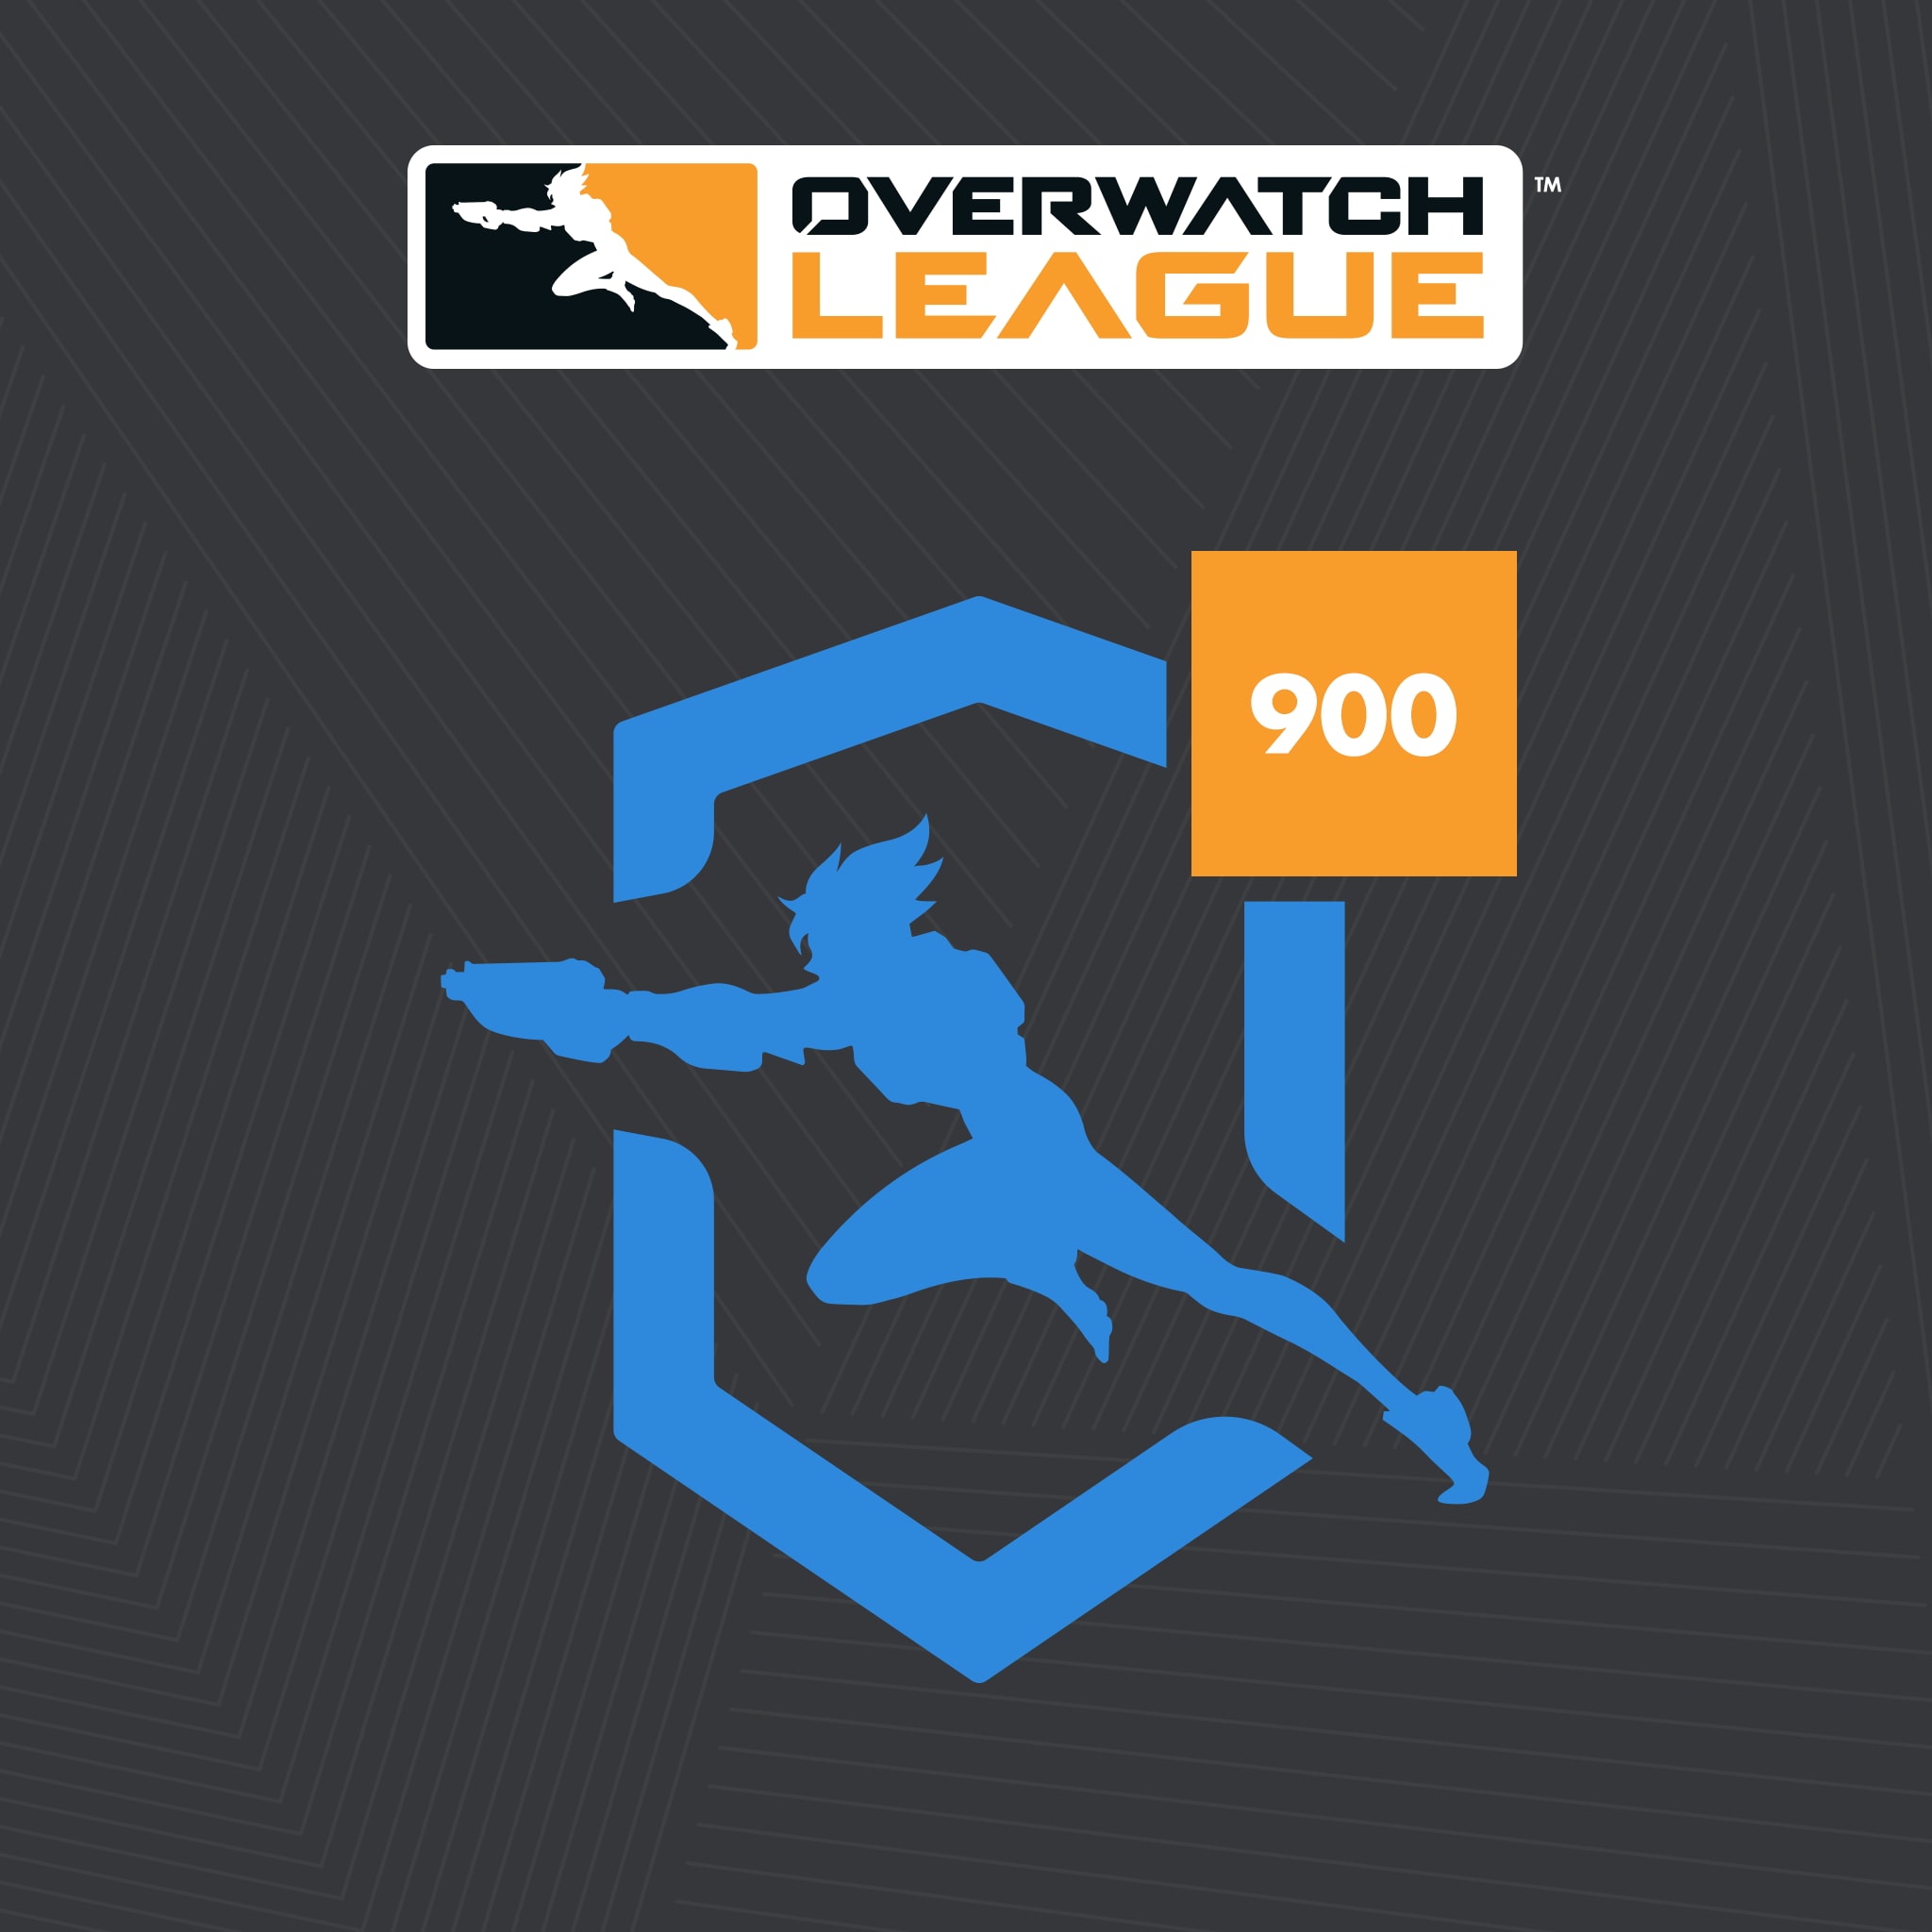 Overwatch League™ - 900 jetons de ligue